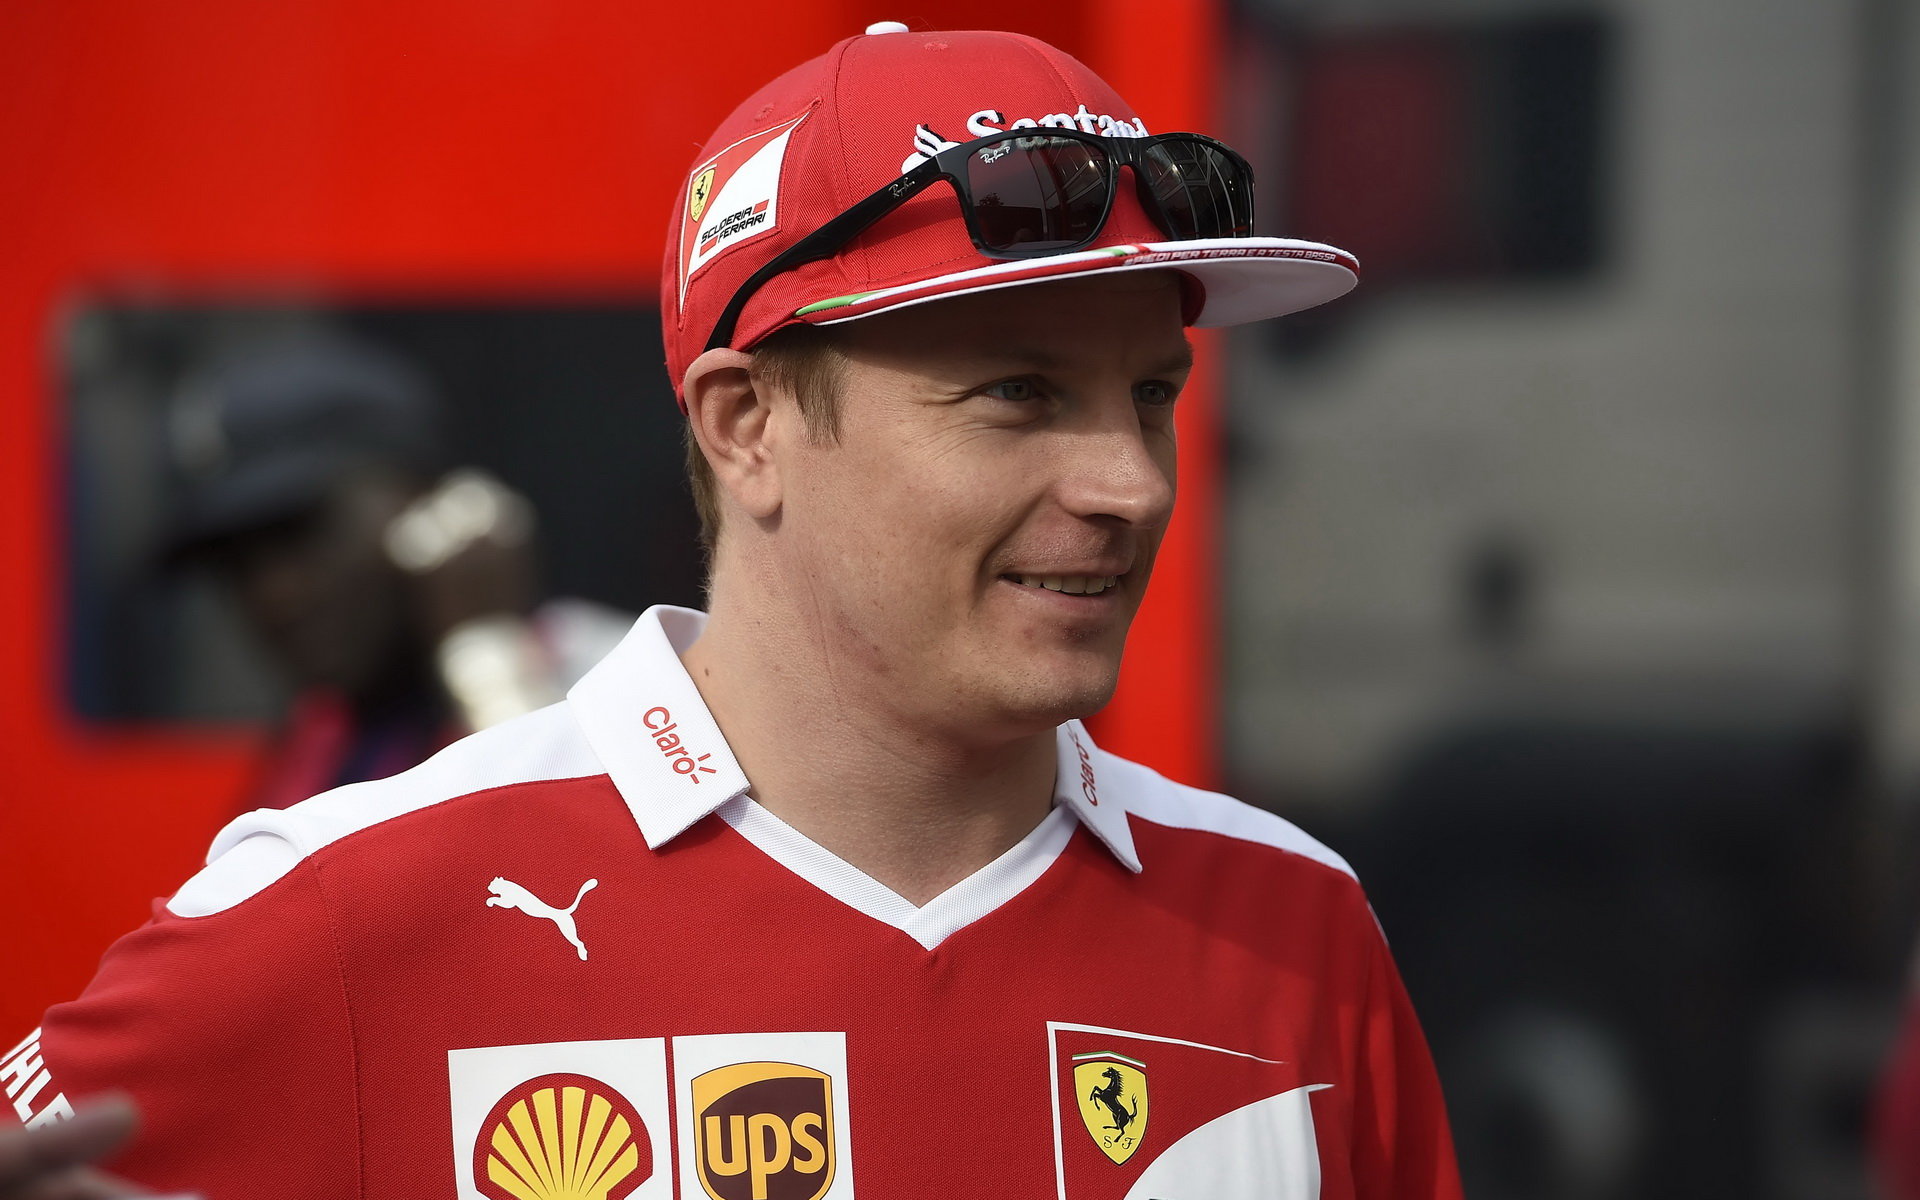 Kimi Räikkönen v Monze